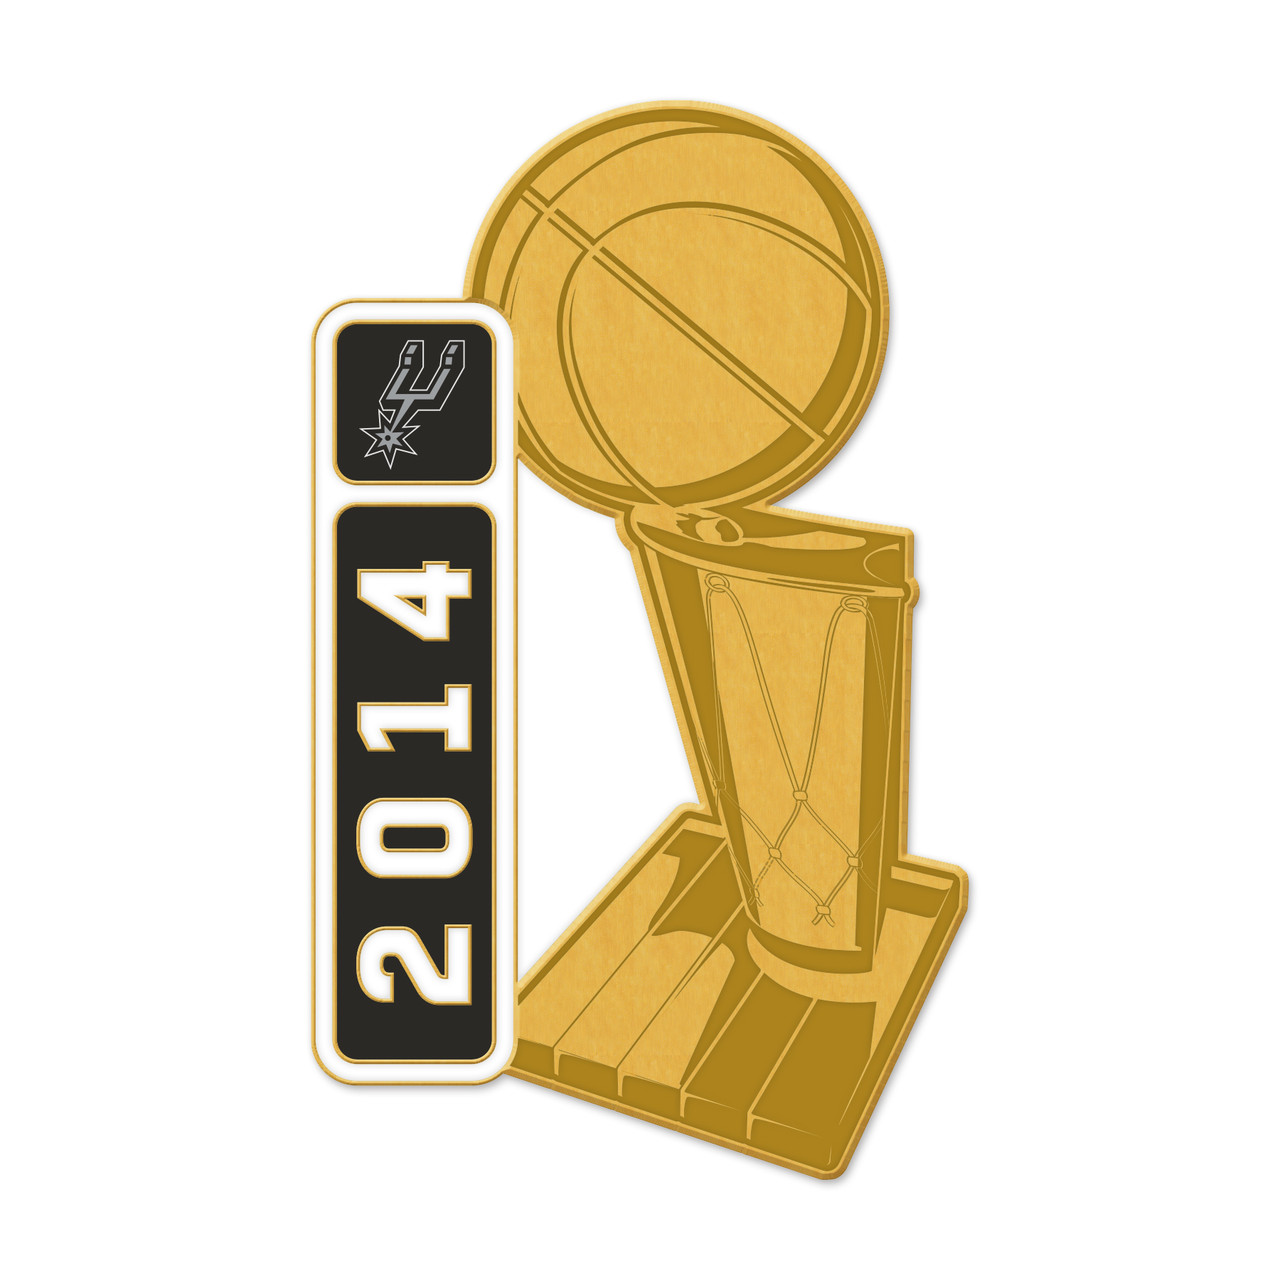 San Antonio Spurs raise 2014 Championship Banner 